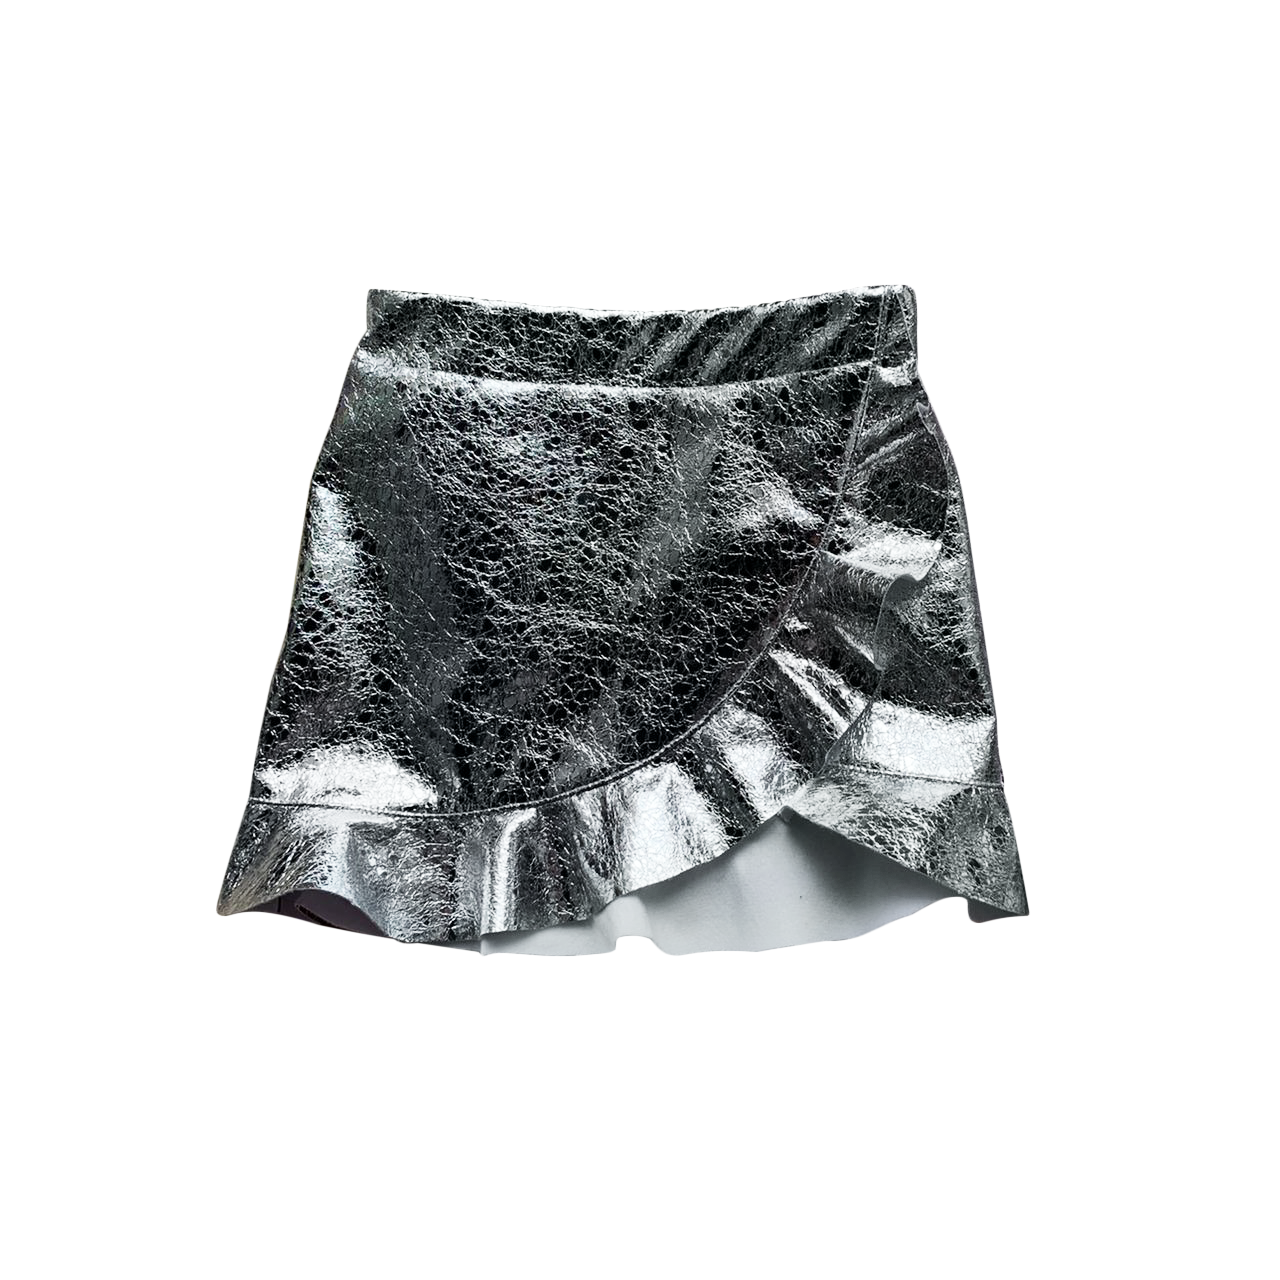 Silver Mini Skirt